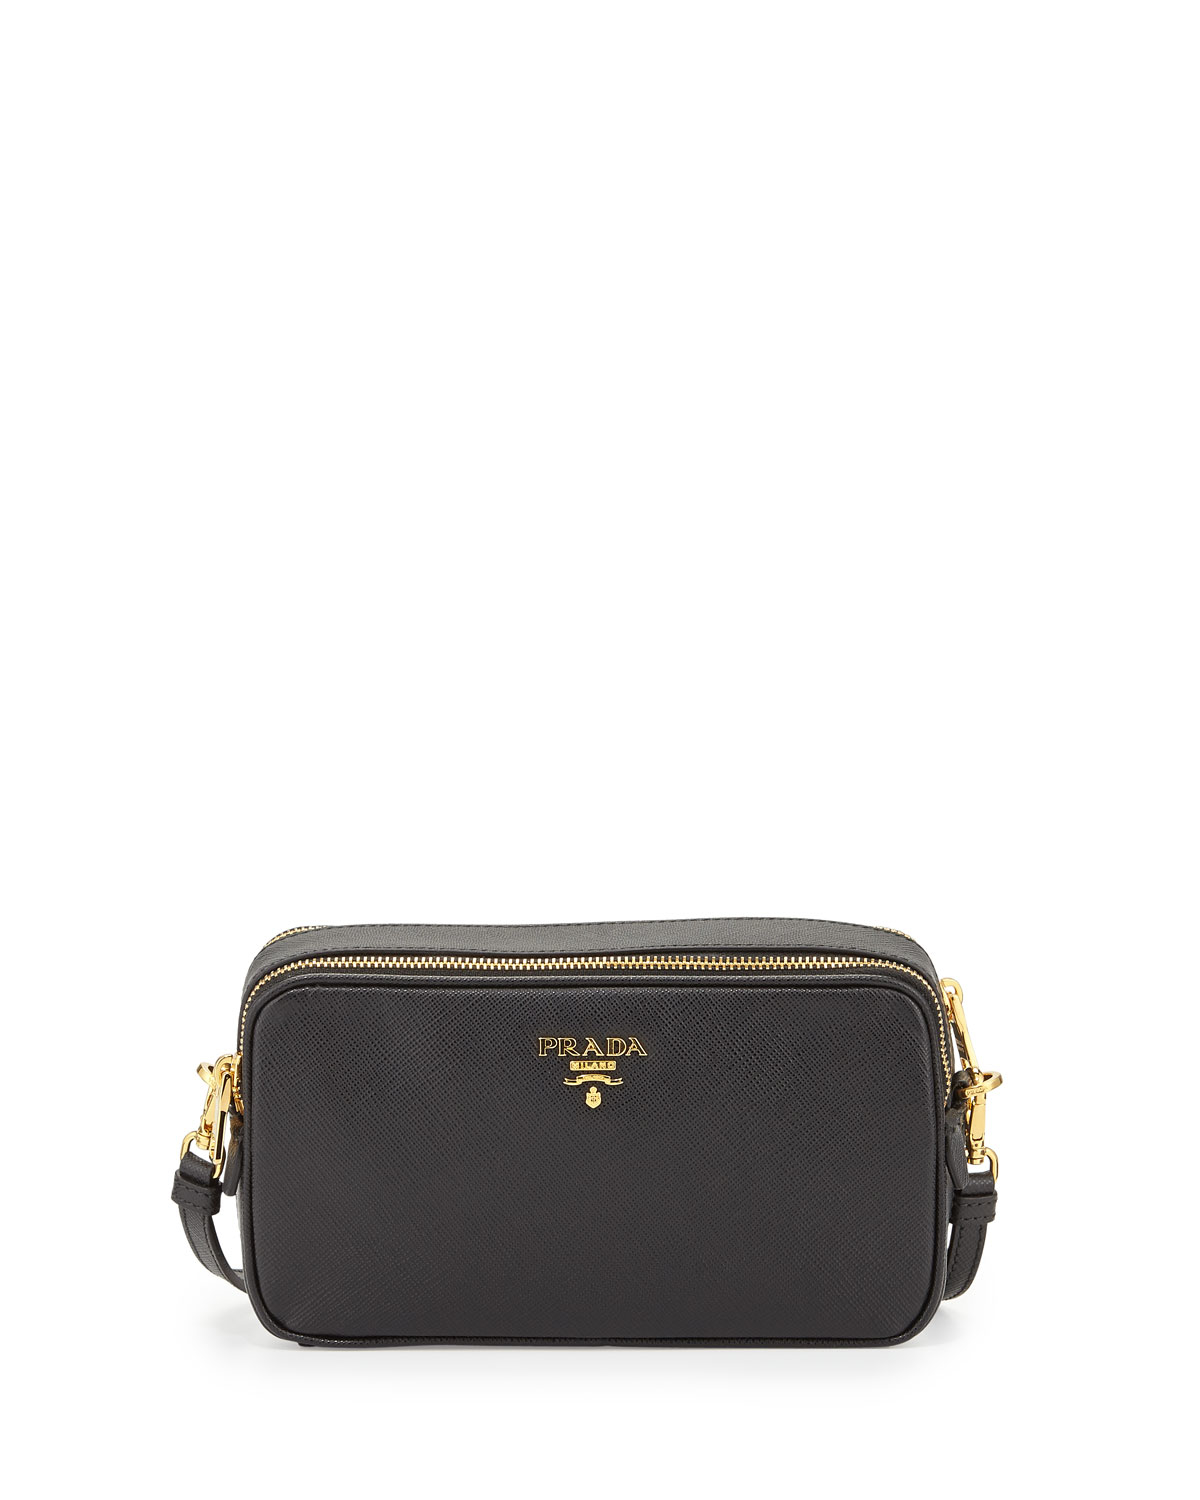 Prada Saffiano Mini Crossbody Bag in Black | Lyst